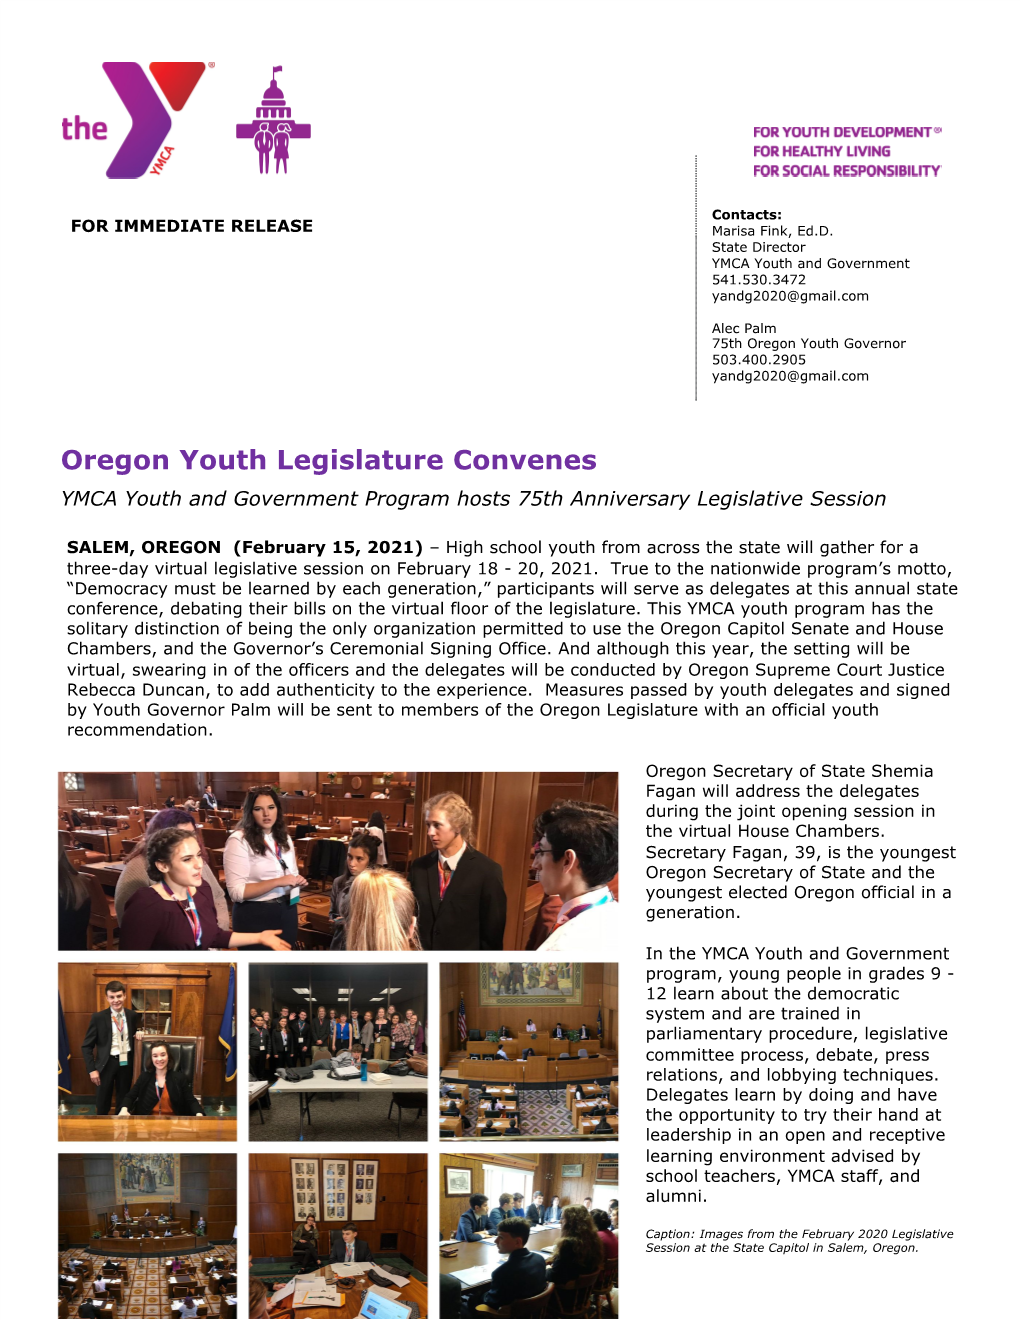 Oregon Youth Legislature Convenes YMCA Youth and Government Program Hosts 75Th Anniversary Legislative Session